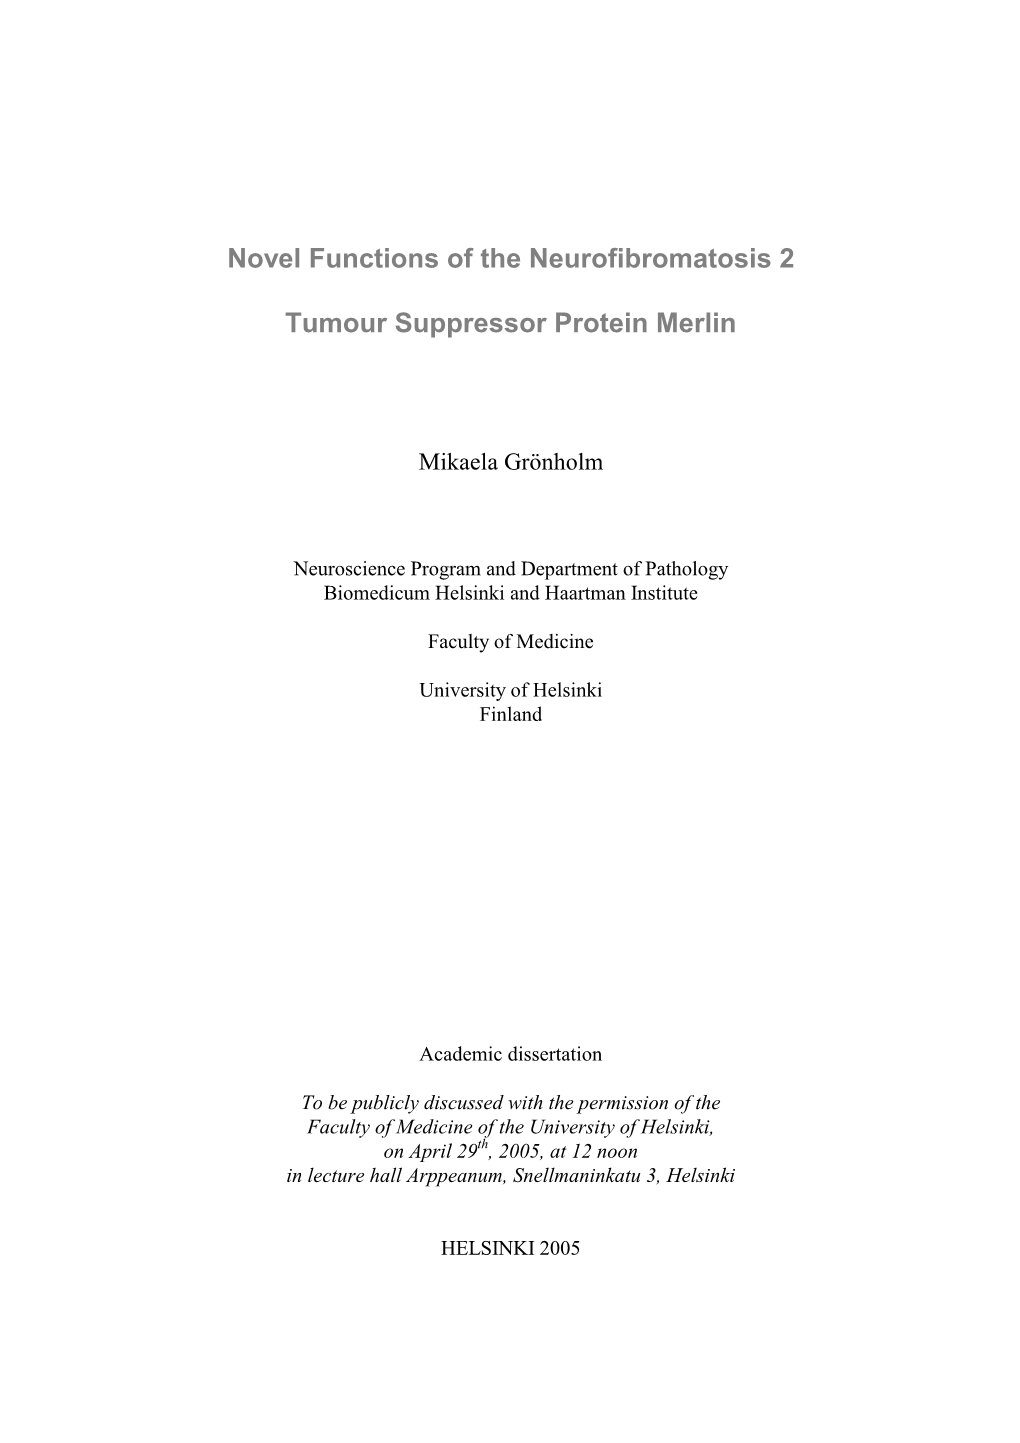 Novel Functions of the Neurofibromatosis 2 Tumour